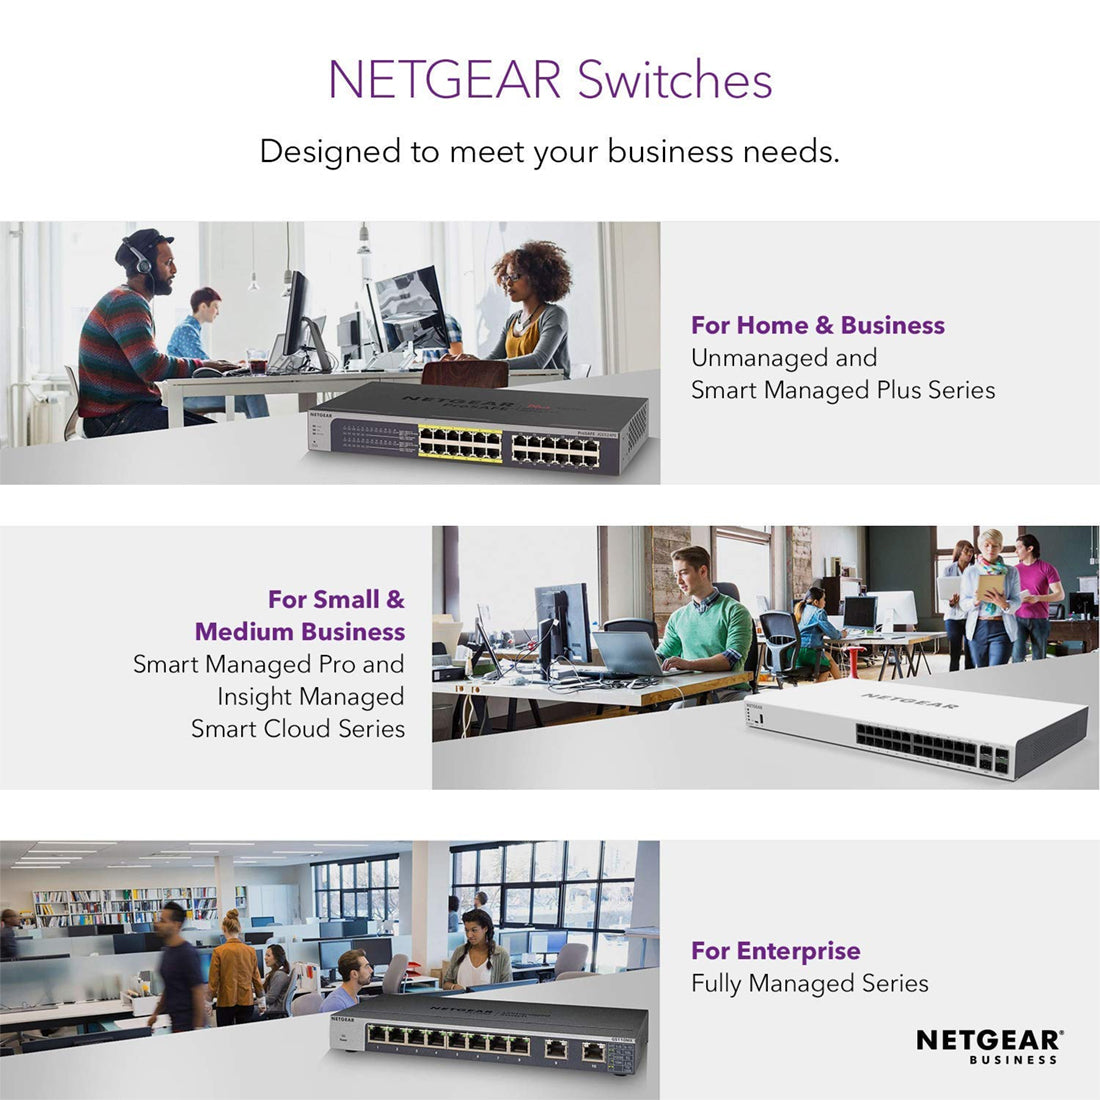 NETGEAR GS310TP 8-पोर्ट गीगाबिट ईथरनेट PoE+ नेटवर्क हब